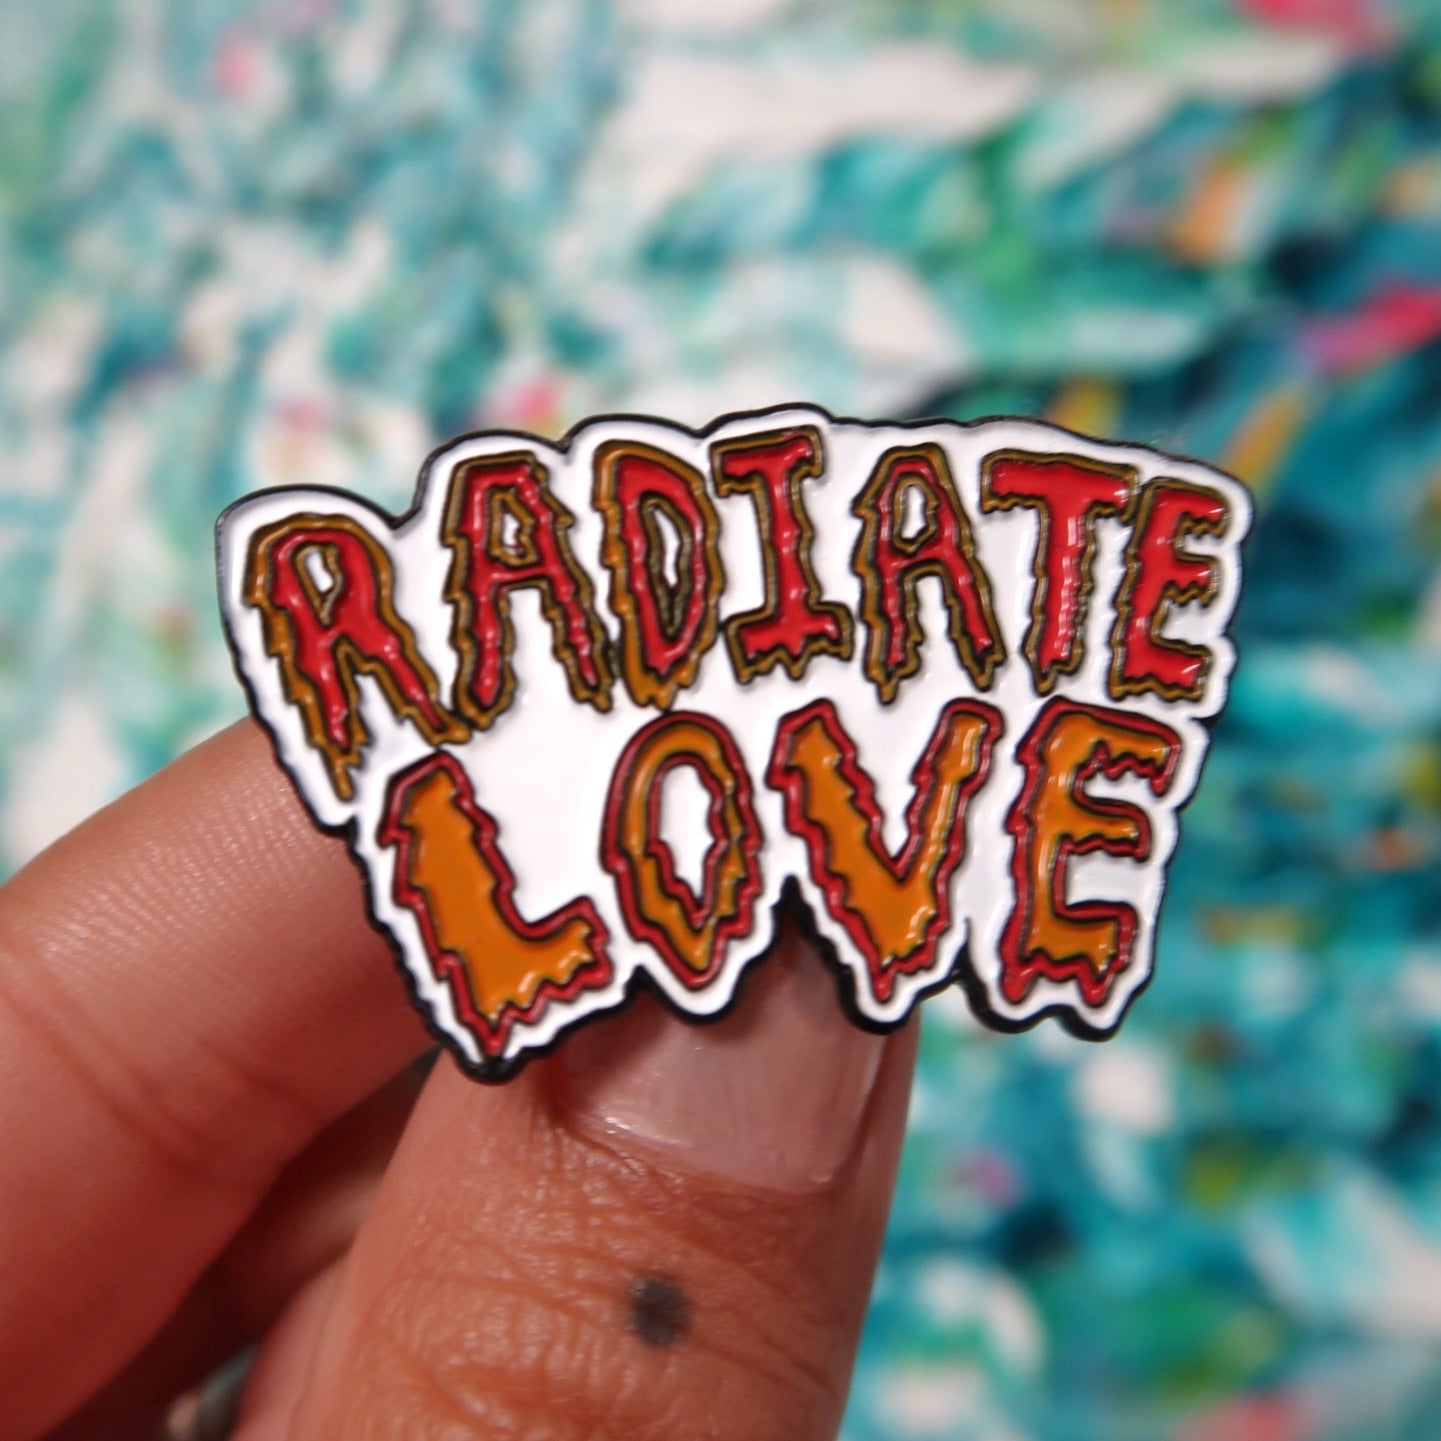 radiate love enamel pin badge